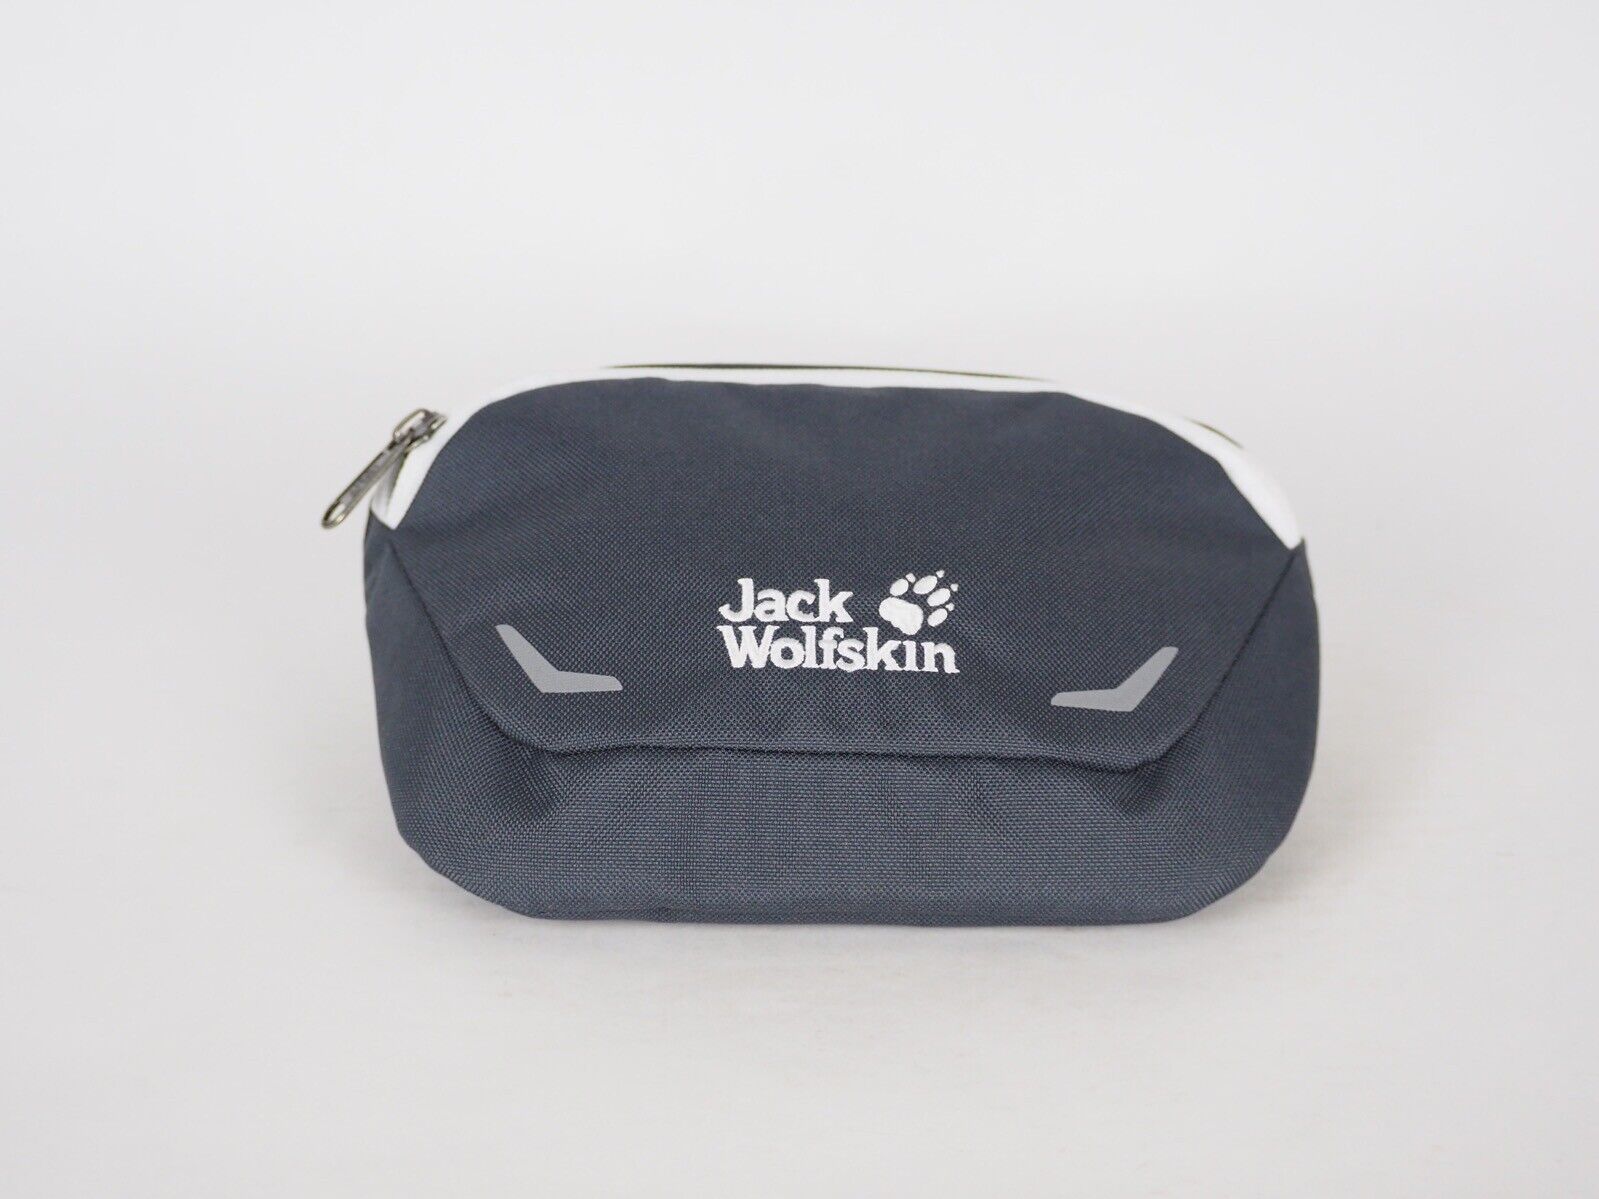 Jack Wolfskin Jungle Gym 8006101 Zebra Grey Casual Travel Running Small Hip Bag